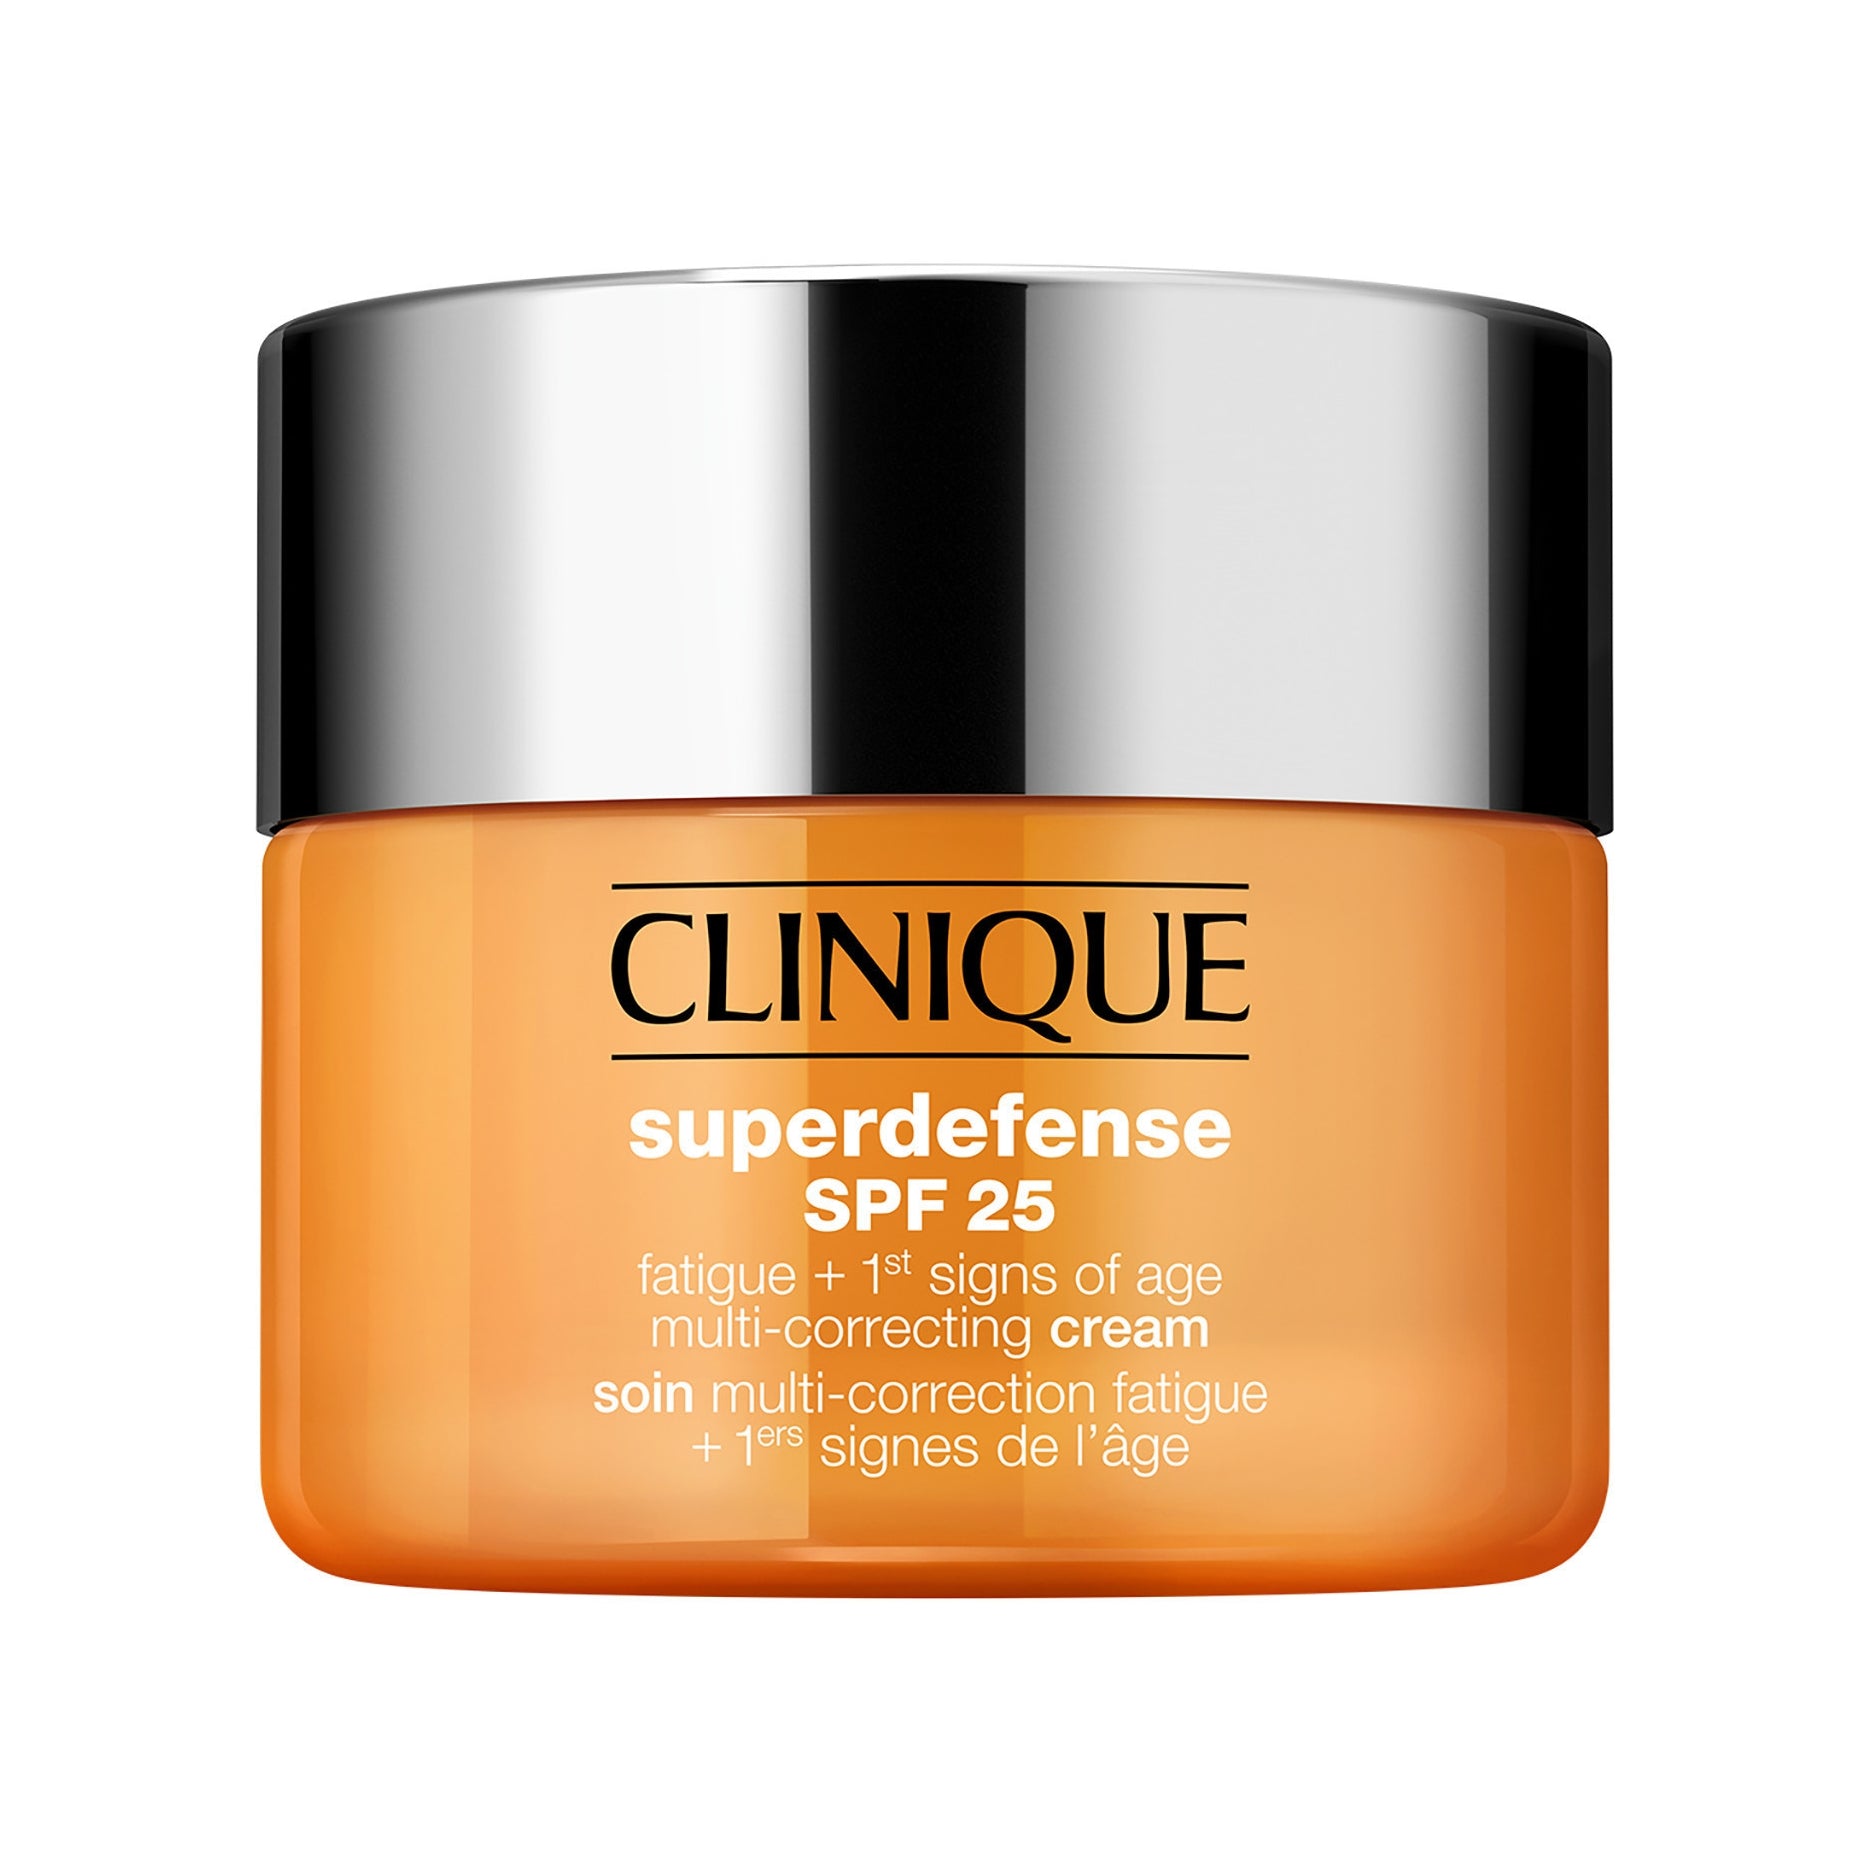 SUPERDEFENSE SPF25 multi-correcting cream I/II Gesichtspflege CLINIQUE   